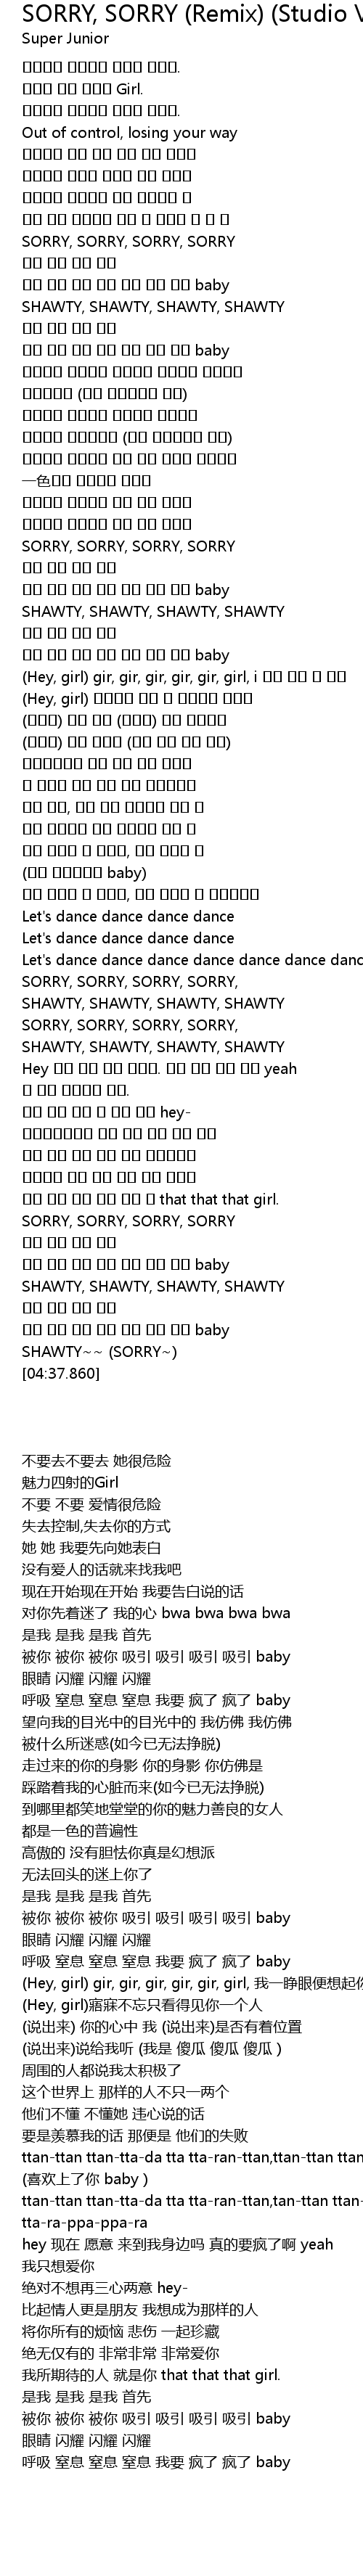 Sorry sorry lyrics super junior